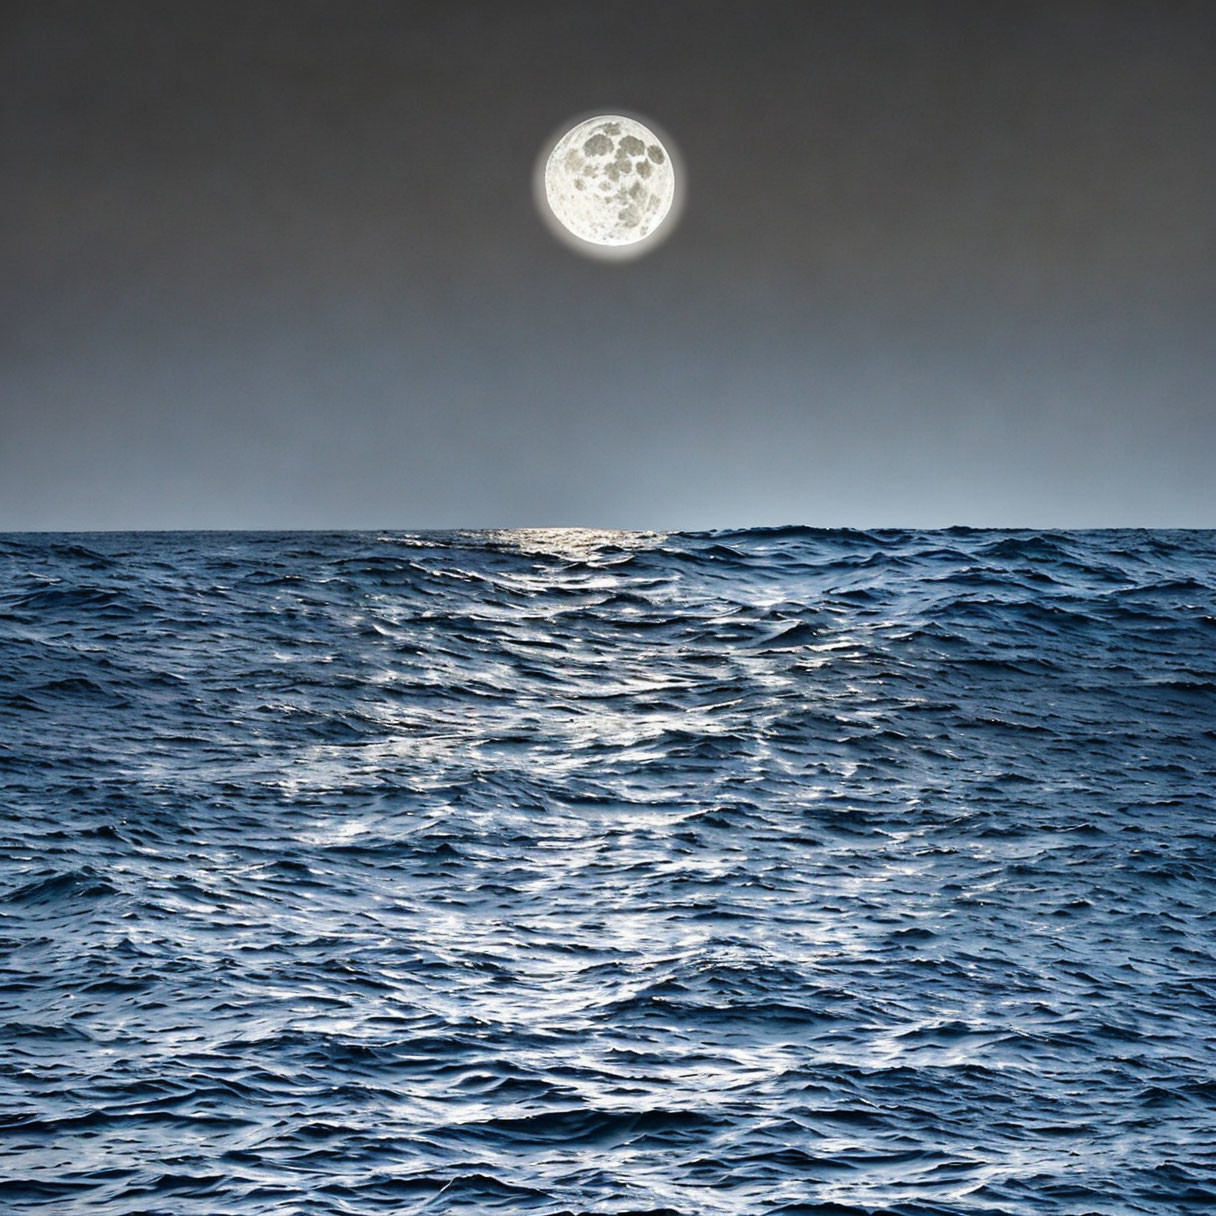 Nighttime Ocean Scene: Full Moon Reflecting on Textured Water